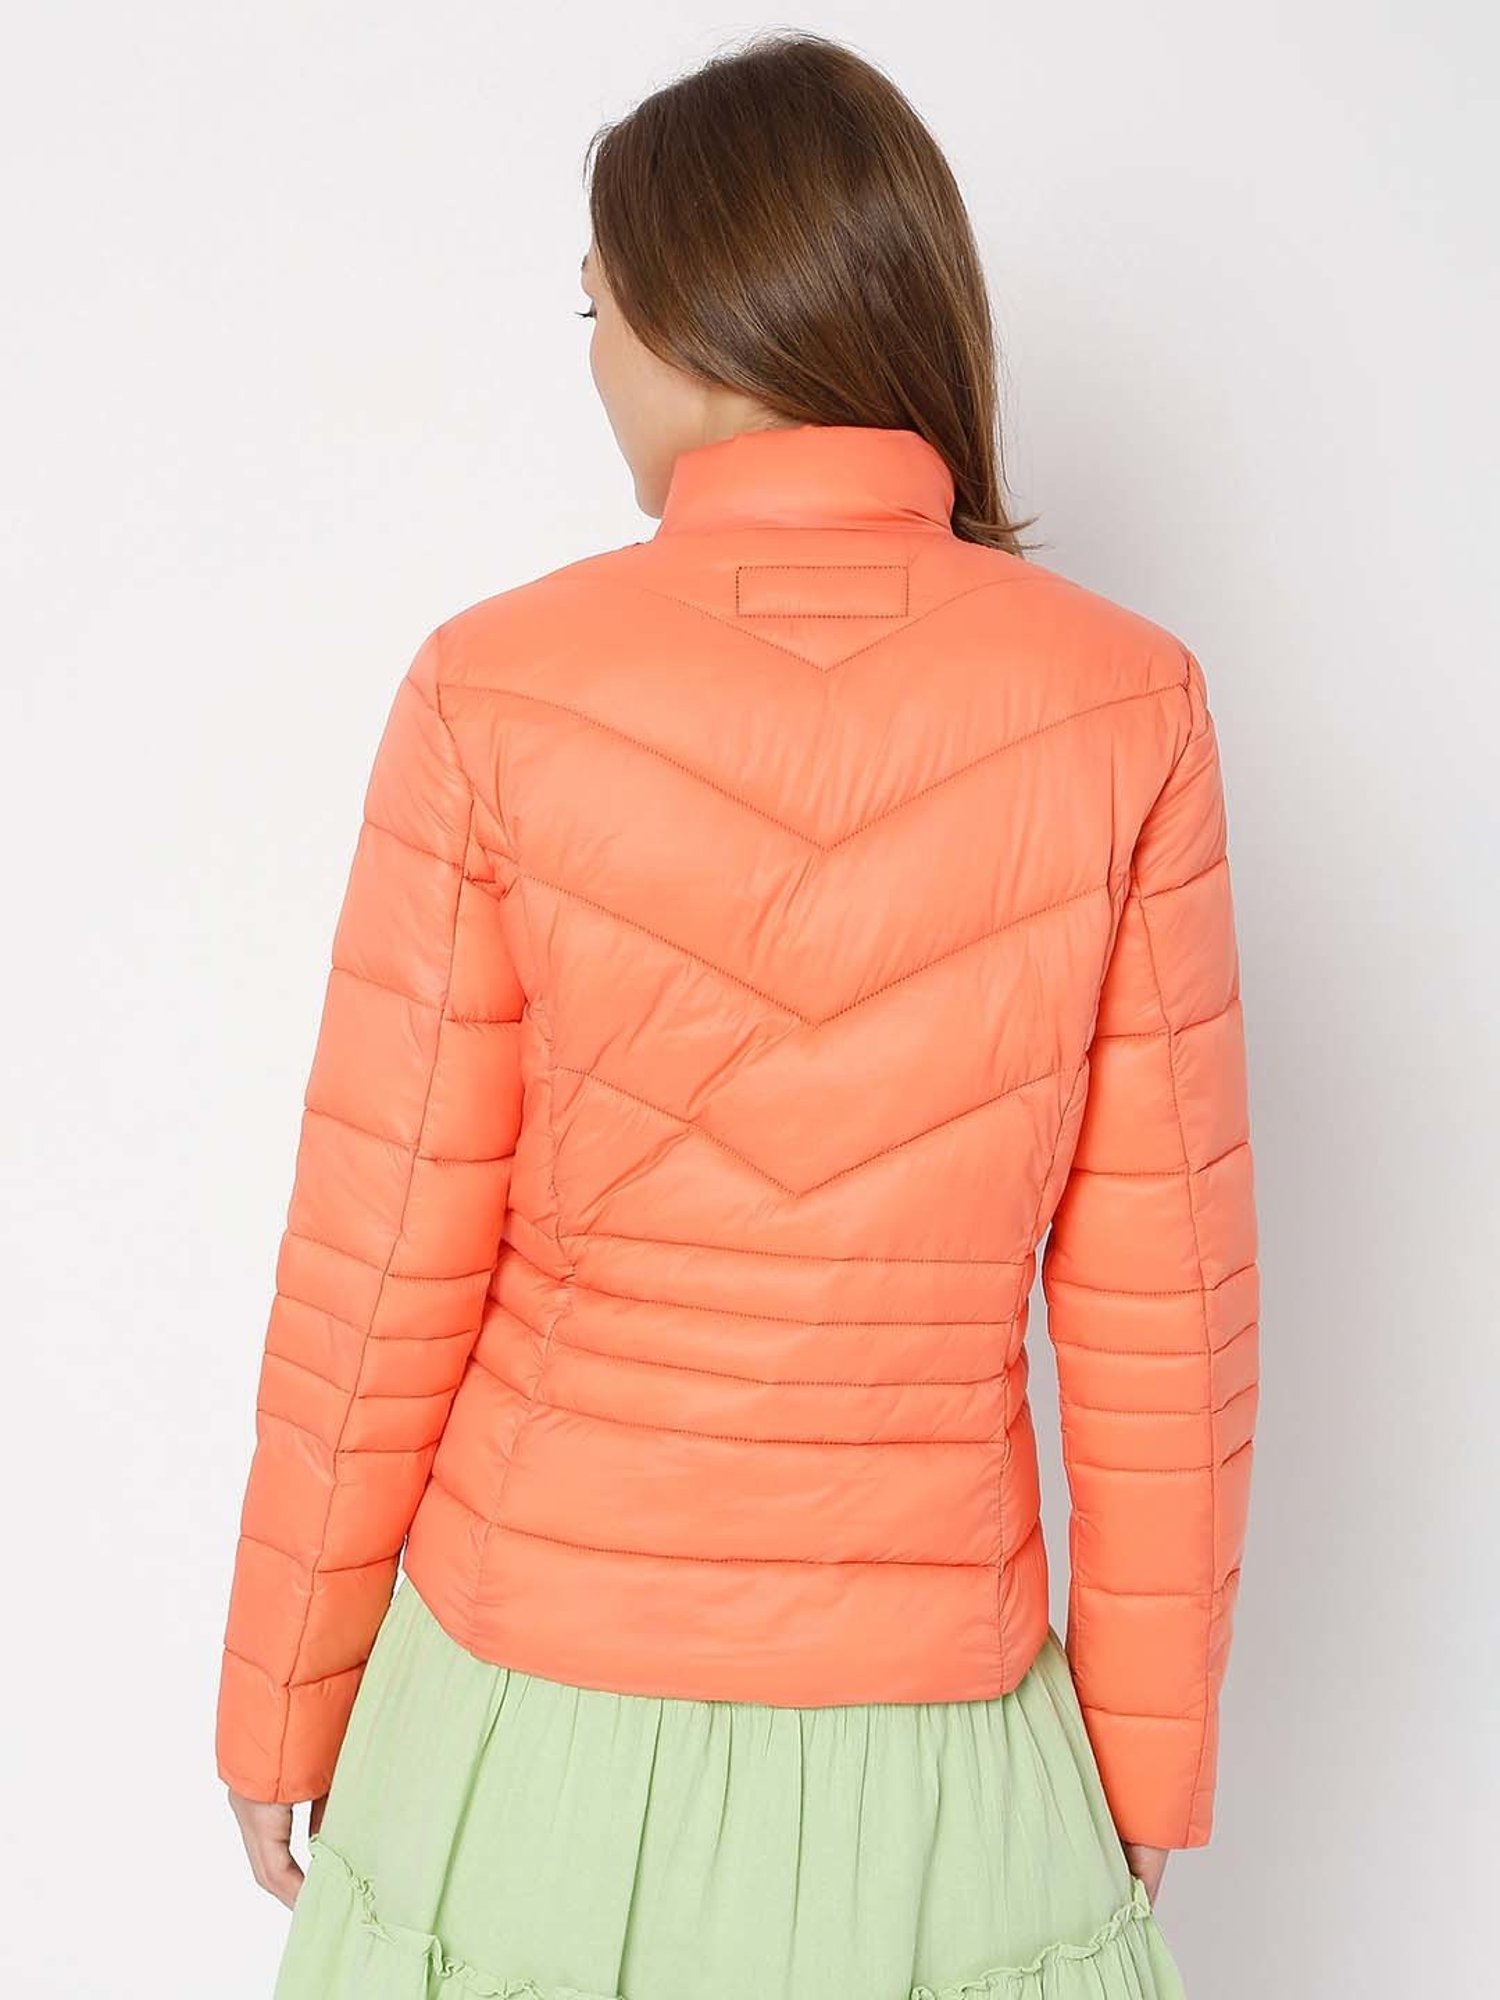 A Small Orange Llc|women's Orange Notched Lapel Blazer - Summer  Cotton-nylon Blend